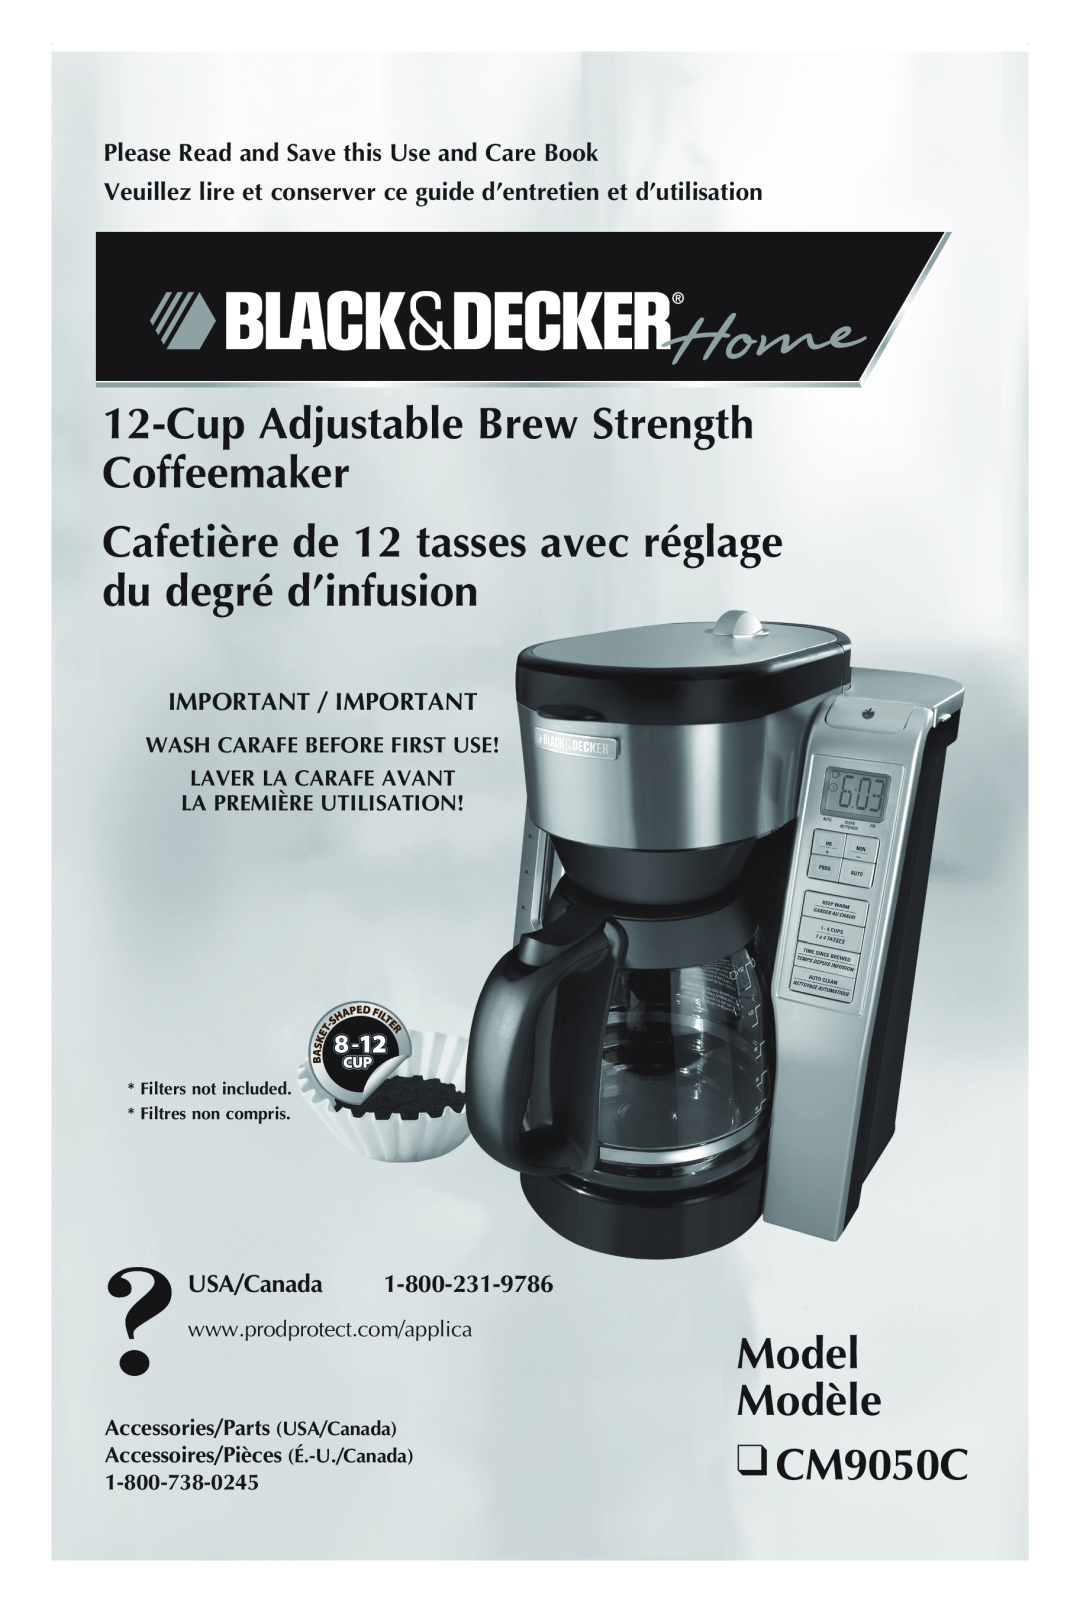 Black & Decker CM9050C manual CupAdjustable Brew Strength Coffeemaker, Cafetière de 12 tasses avec réglage, USA/Canada 